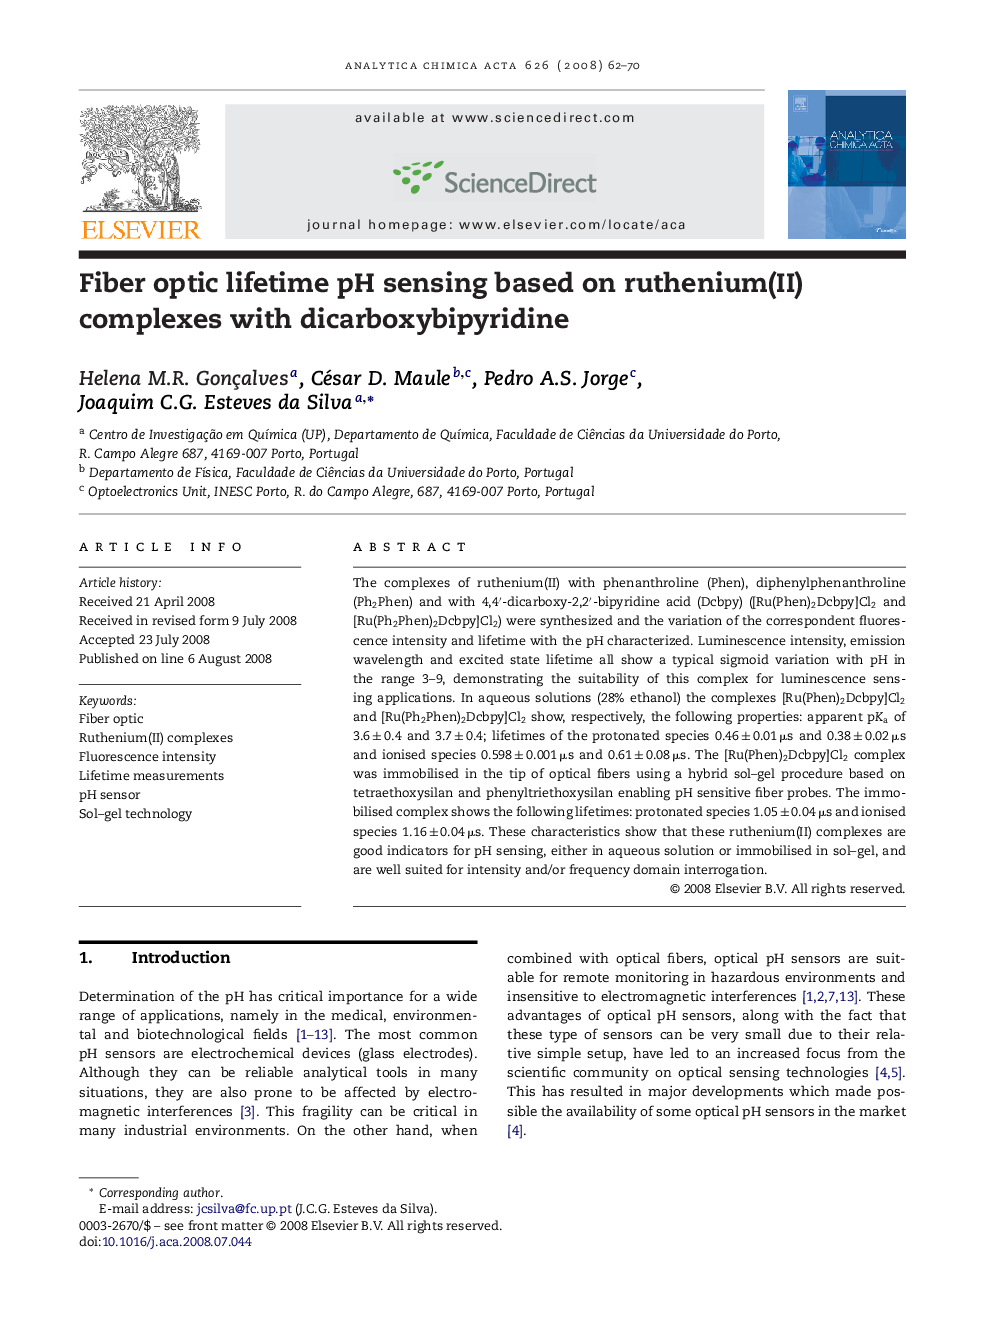 Fiber optic lifetime pH sensing based on ruthenium(II) complexes with dicarboxybipyridine